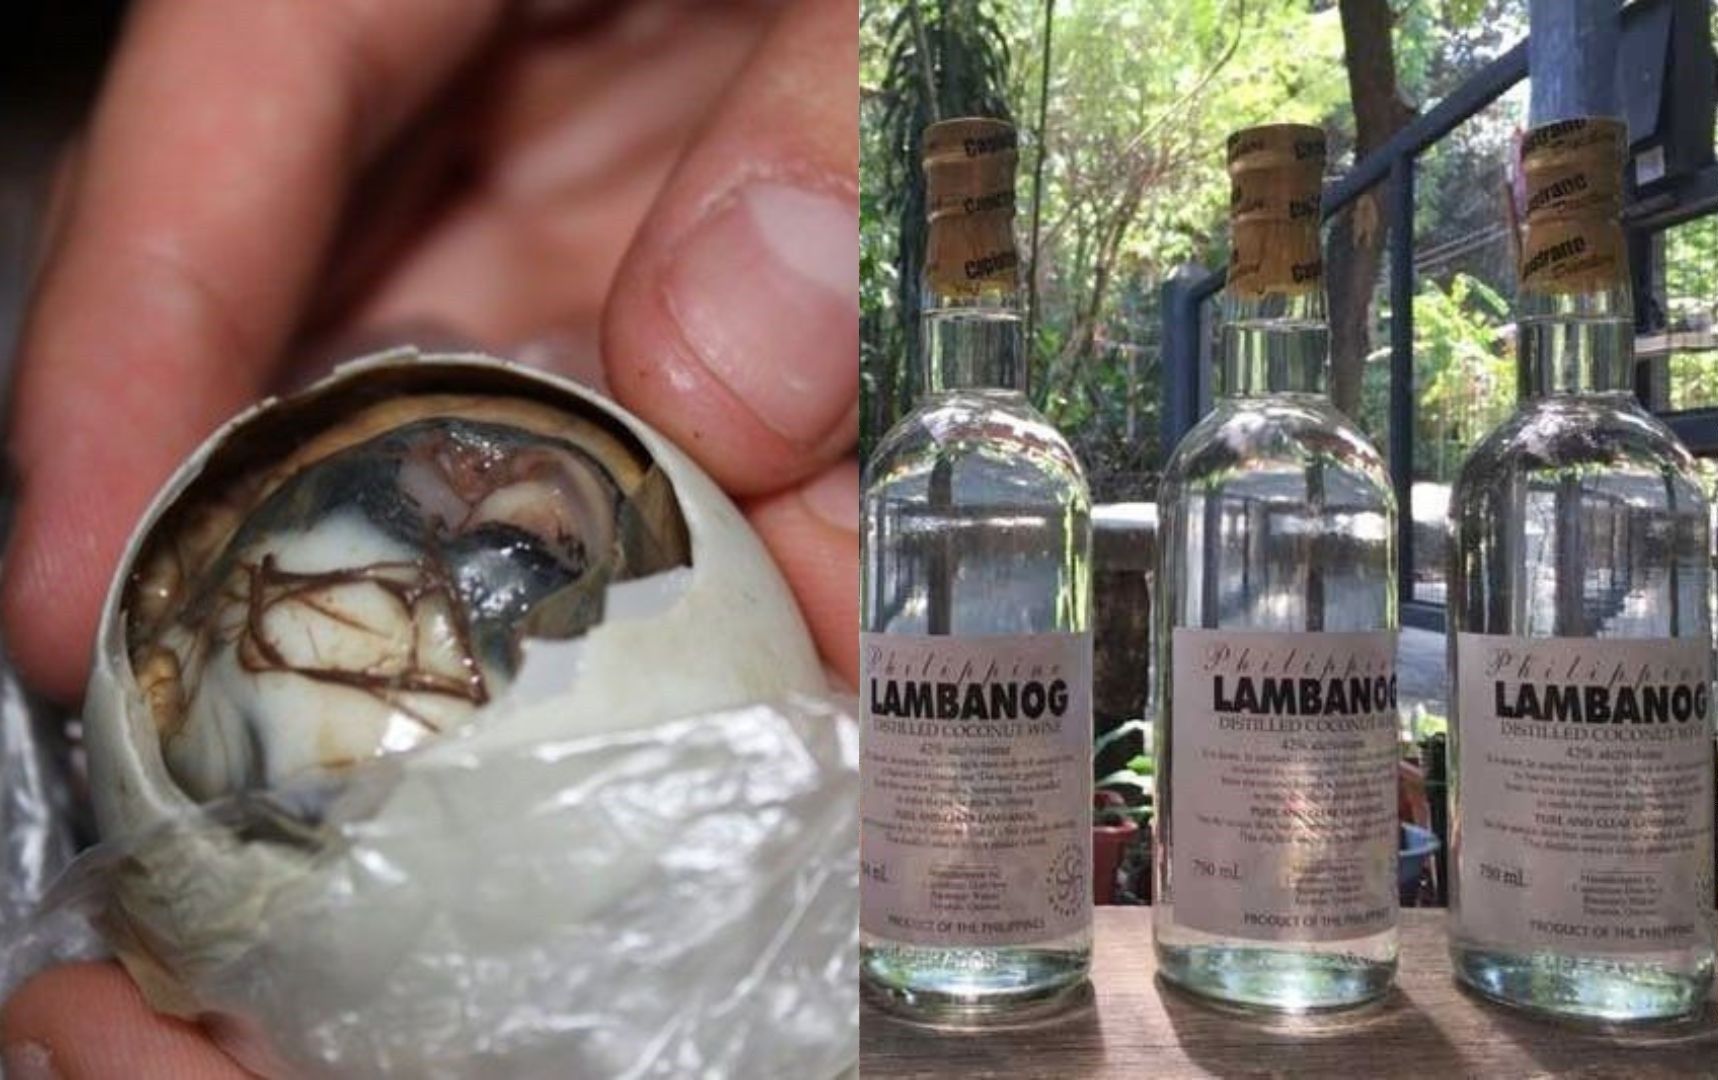 'Balut,' 'lambanog' most mispronounced local food, drink â�� study